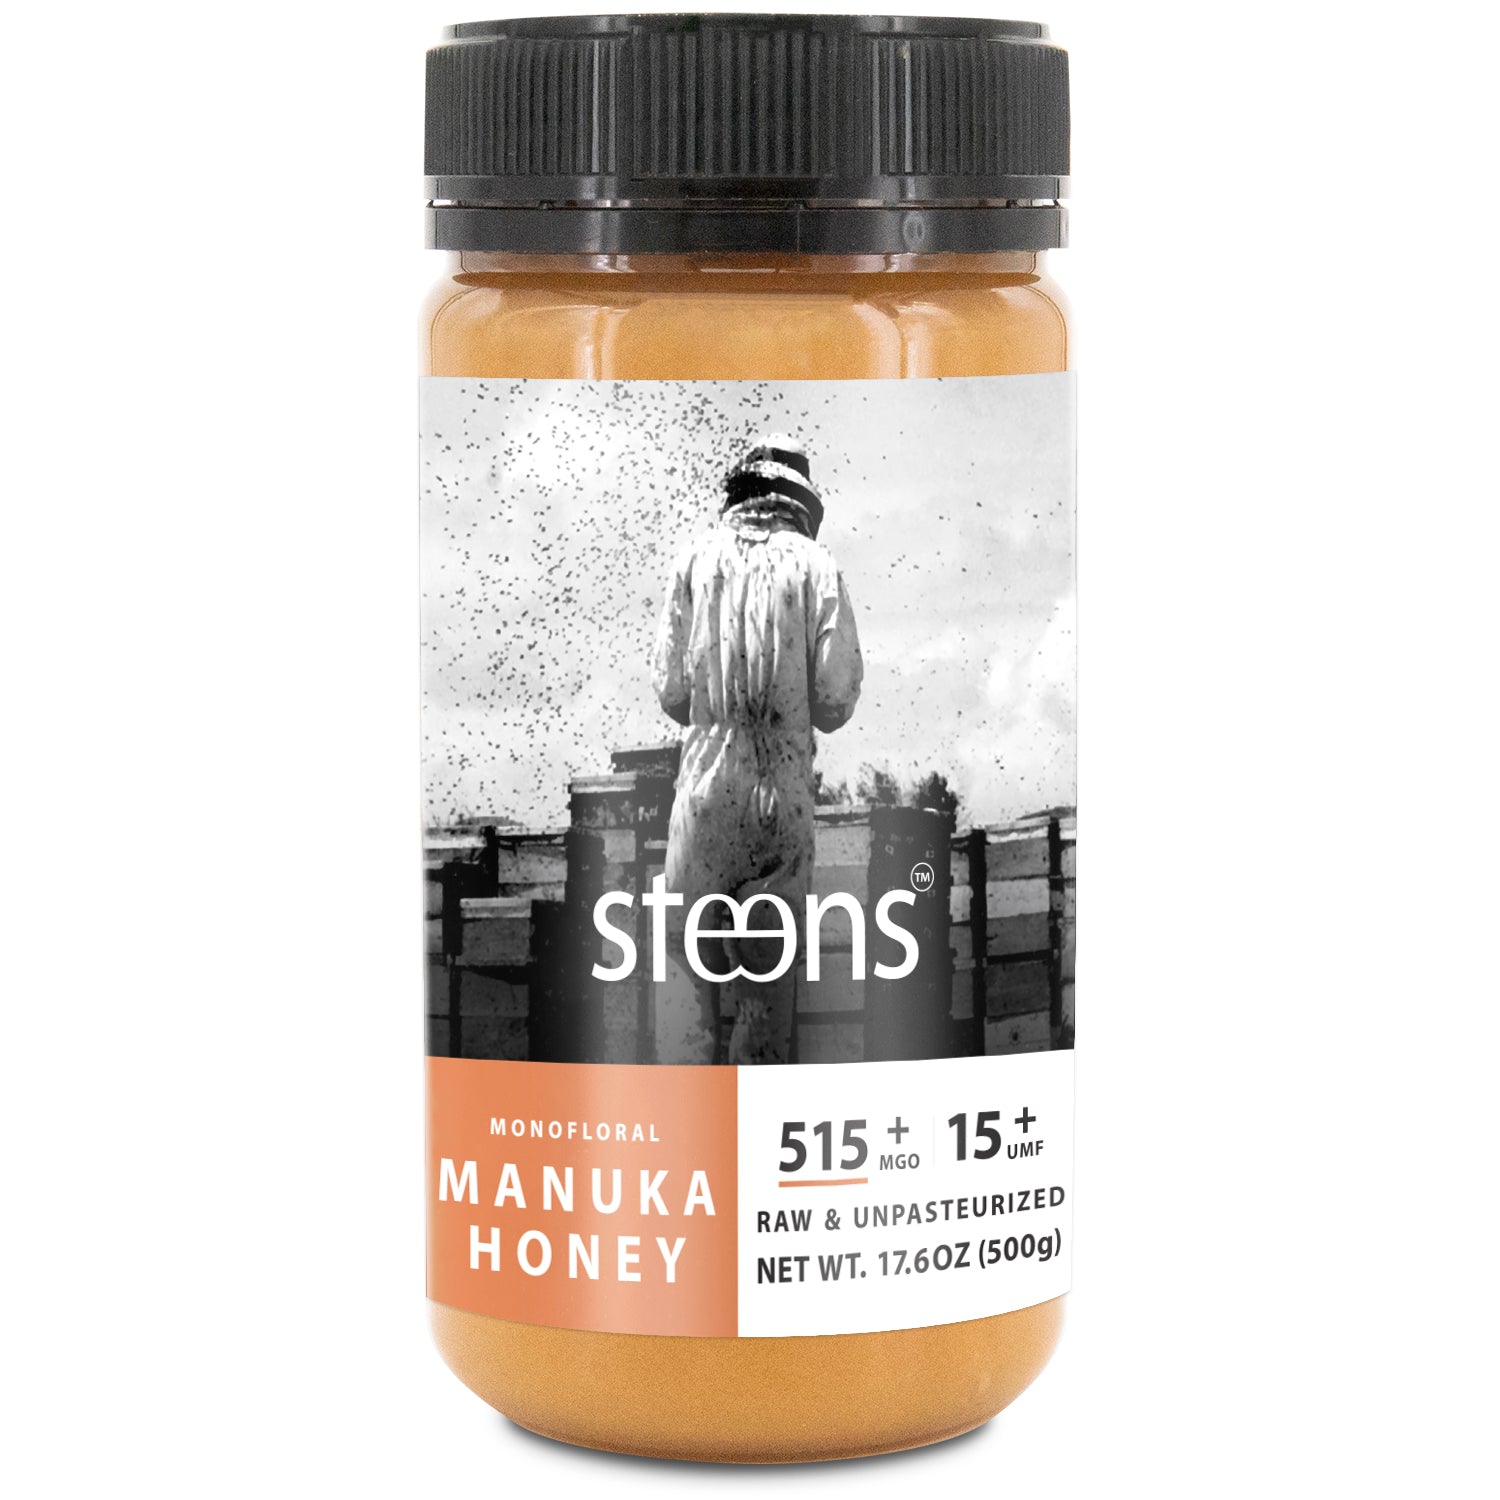 Buy 5 Get 1 Free - Steens Wellbeing Raw Manuka Honey UMF15+ 500g